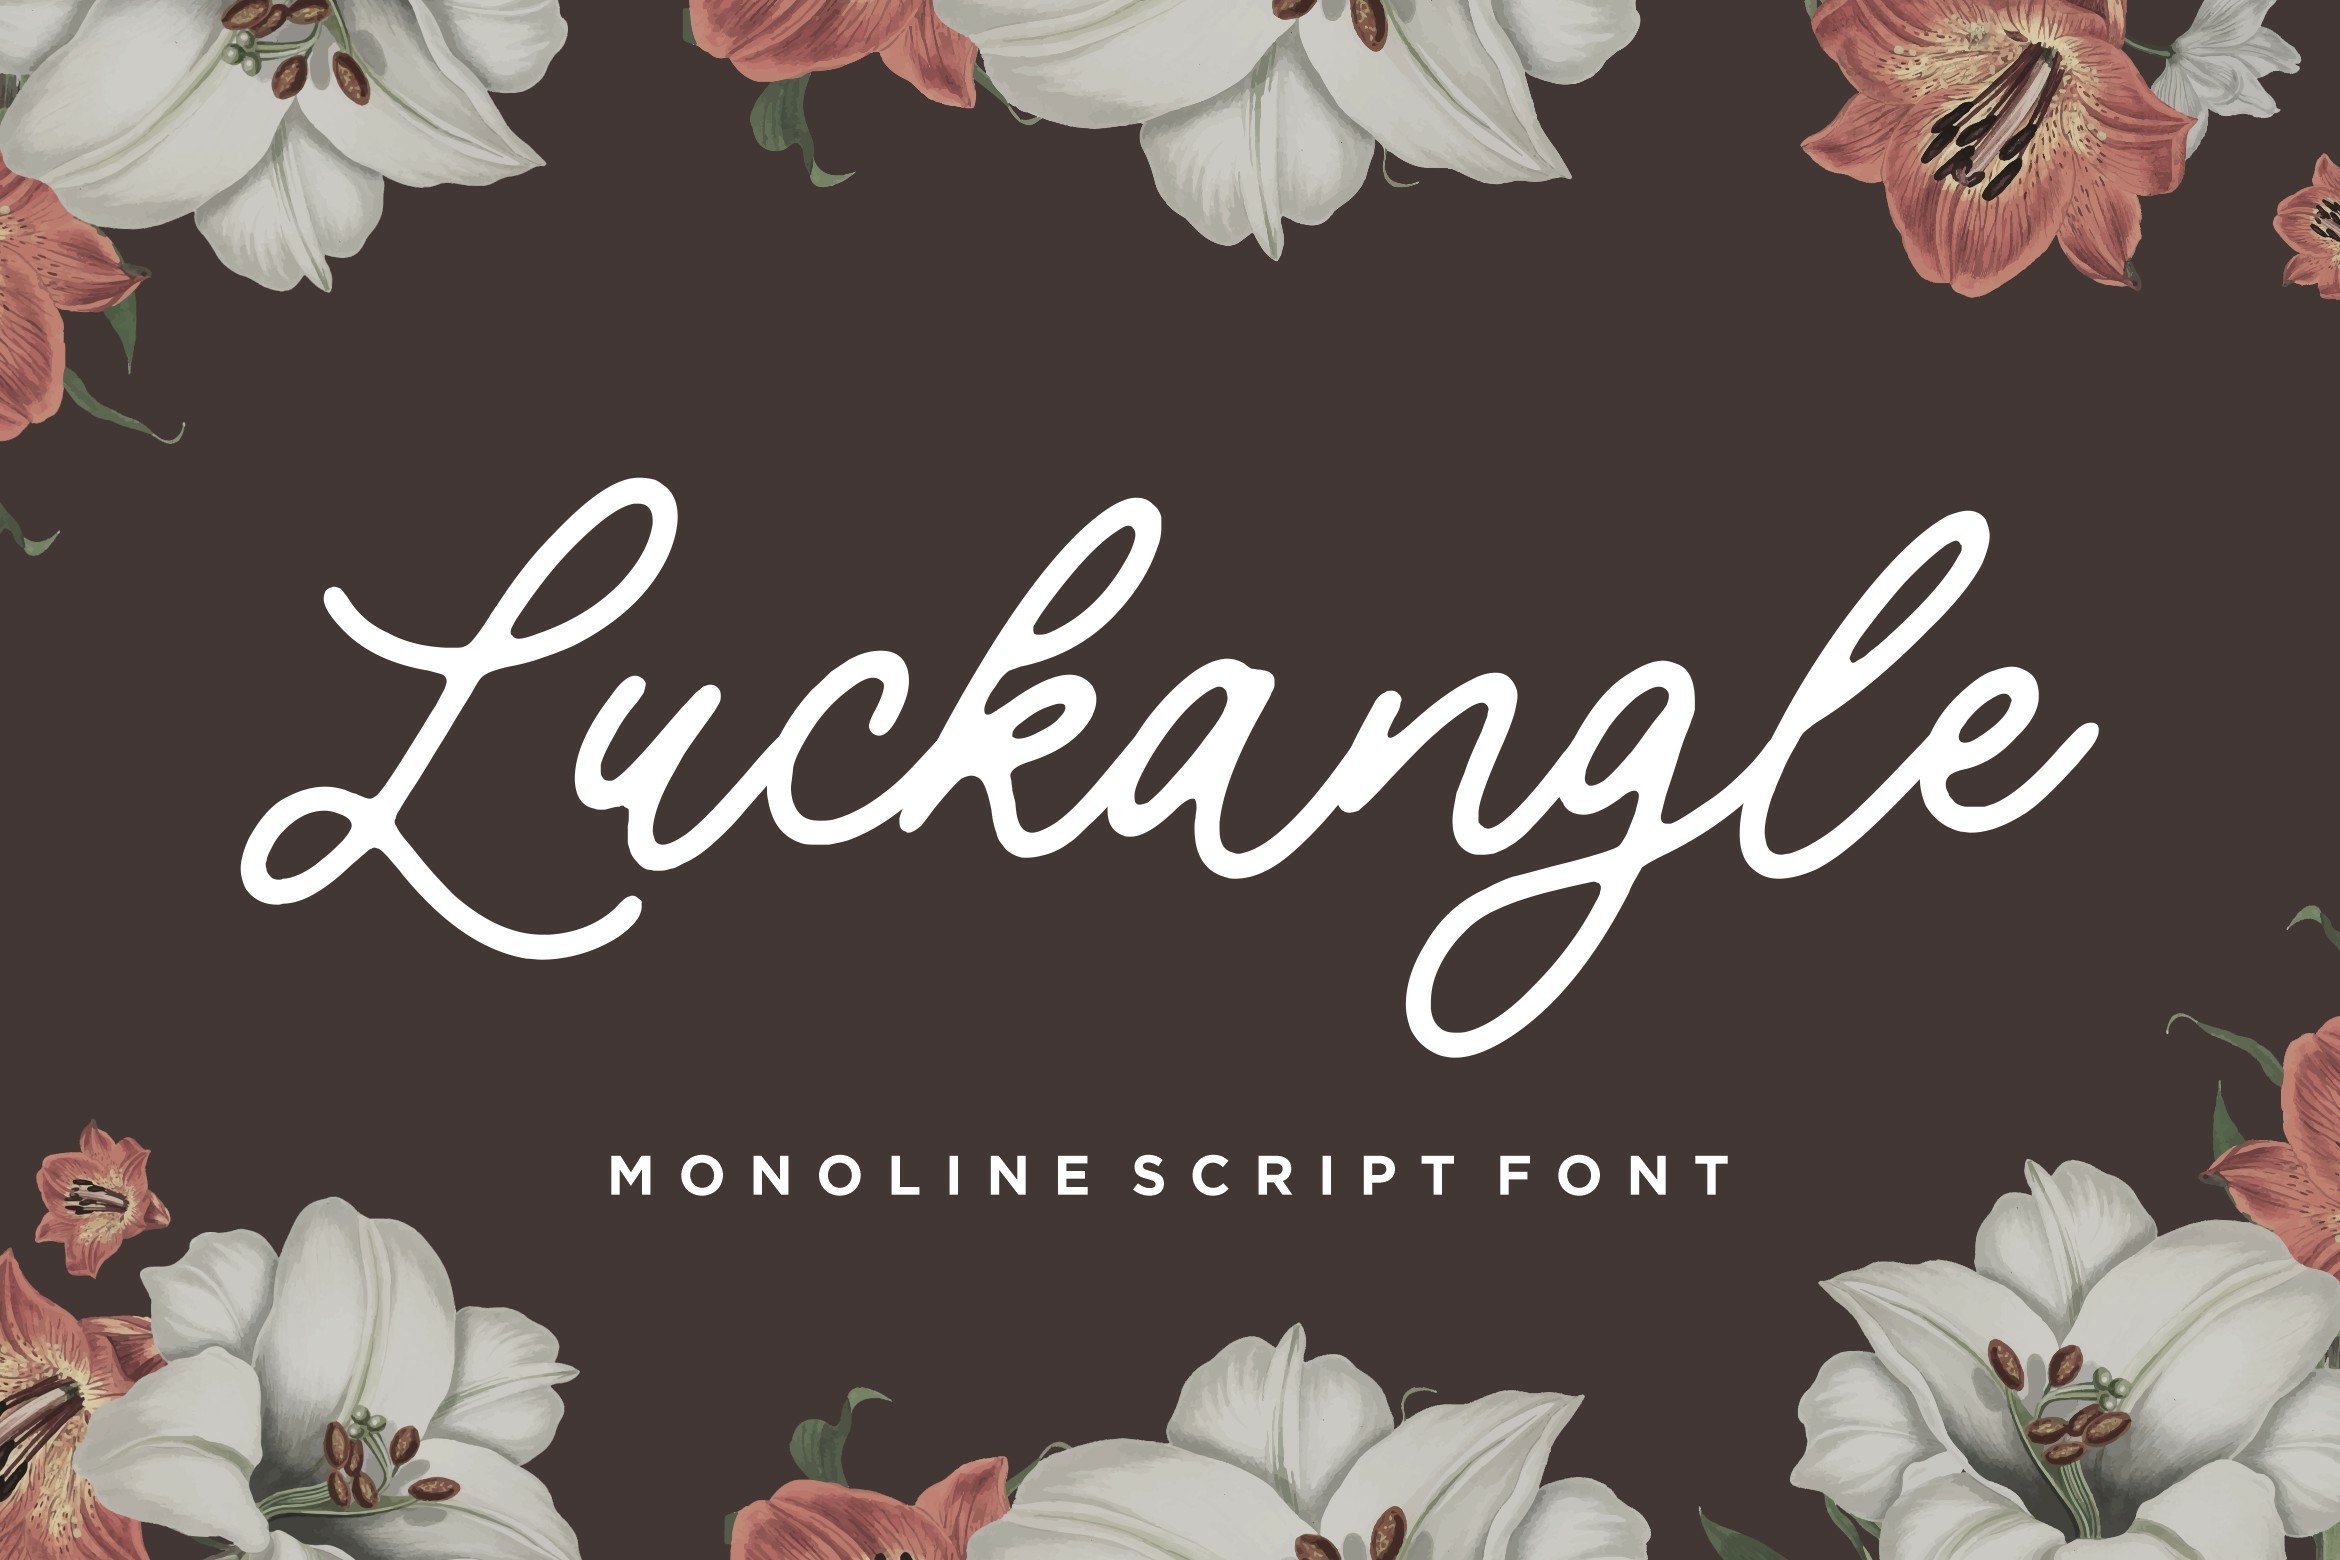 Luckangle Monoline Script Font1